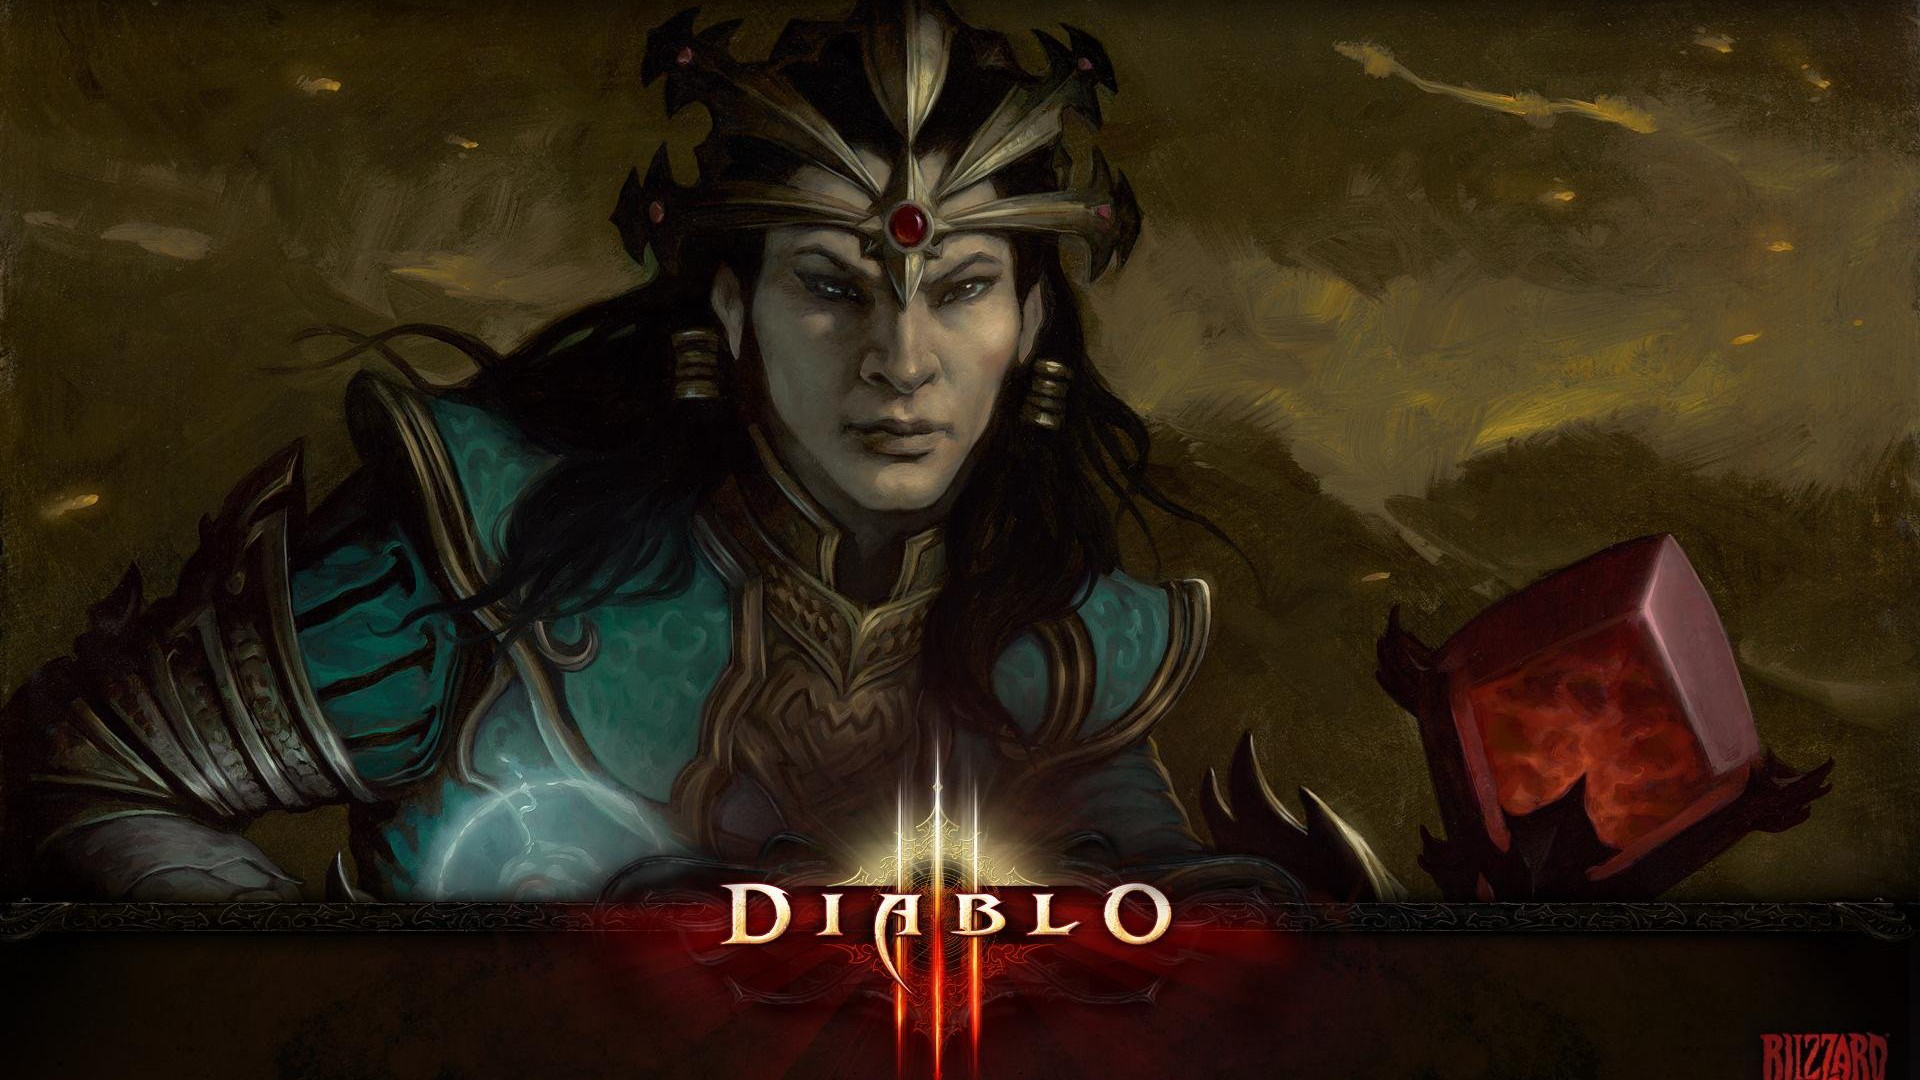 Baixe gratuitamente a imagem Diablo, Videogame, Diablo Iii, Mago (Diablo Iii) na área de trabalho do seu PC